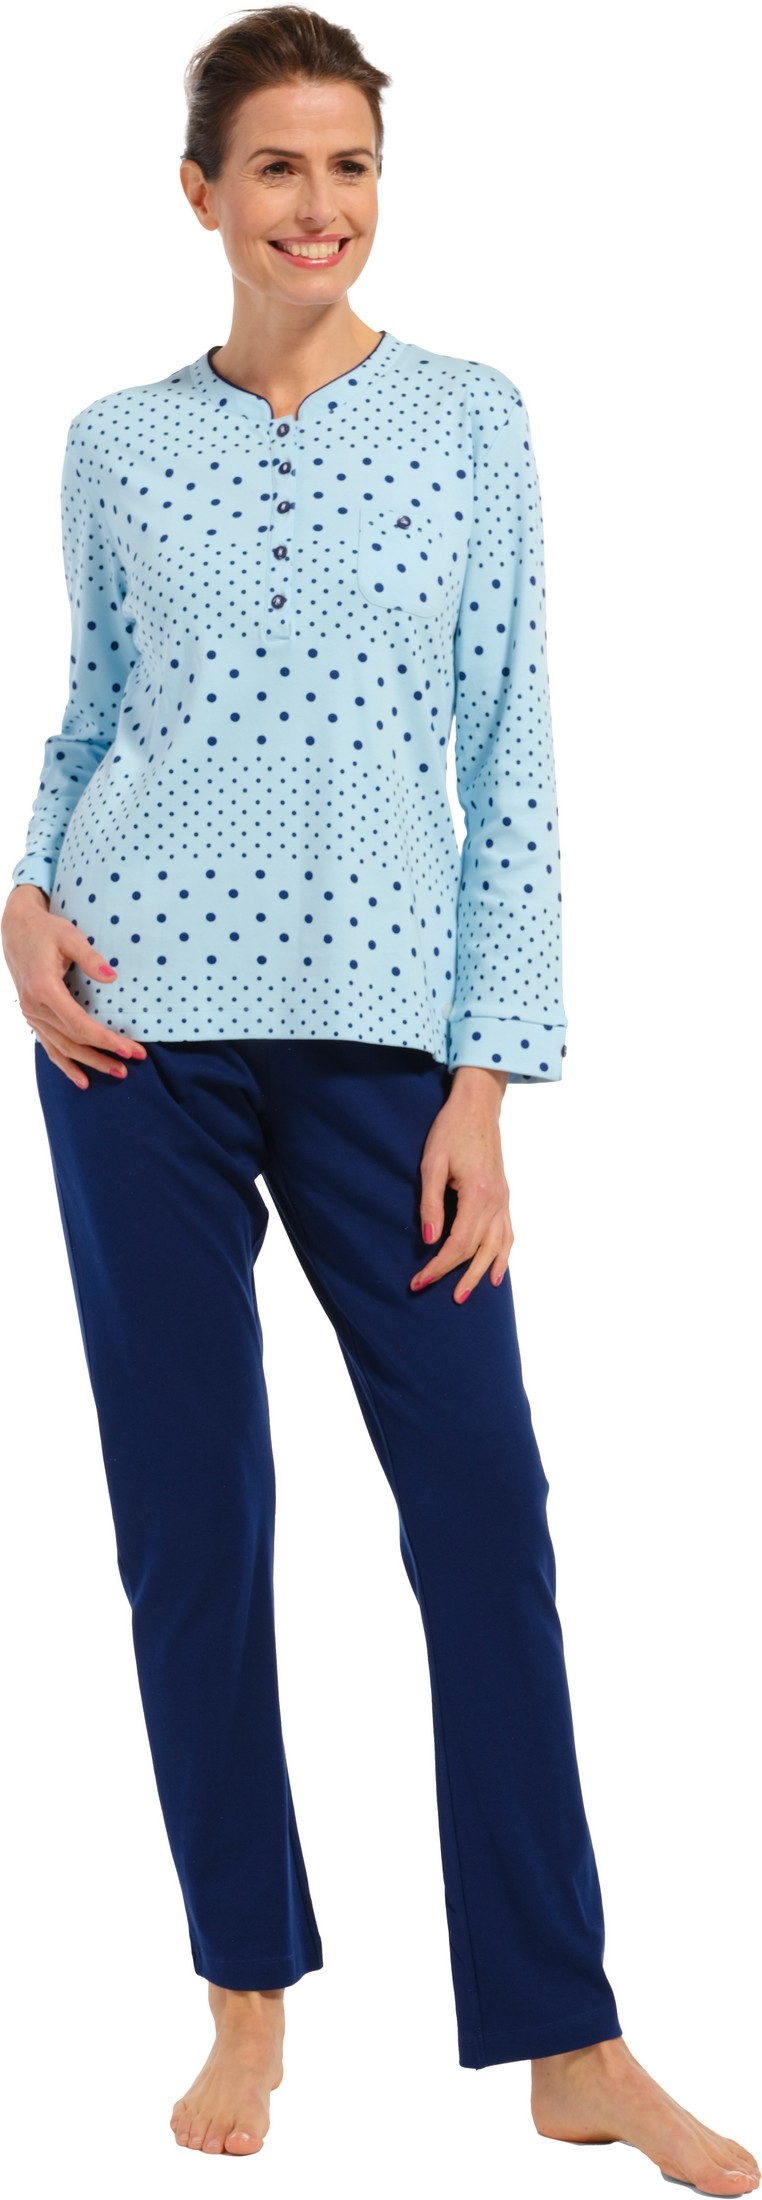 Pastunette dames pyjama 20232-162-4 - Blauw - 48